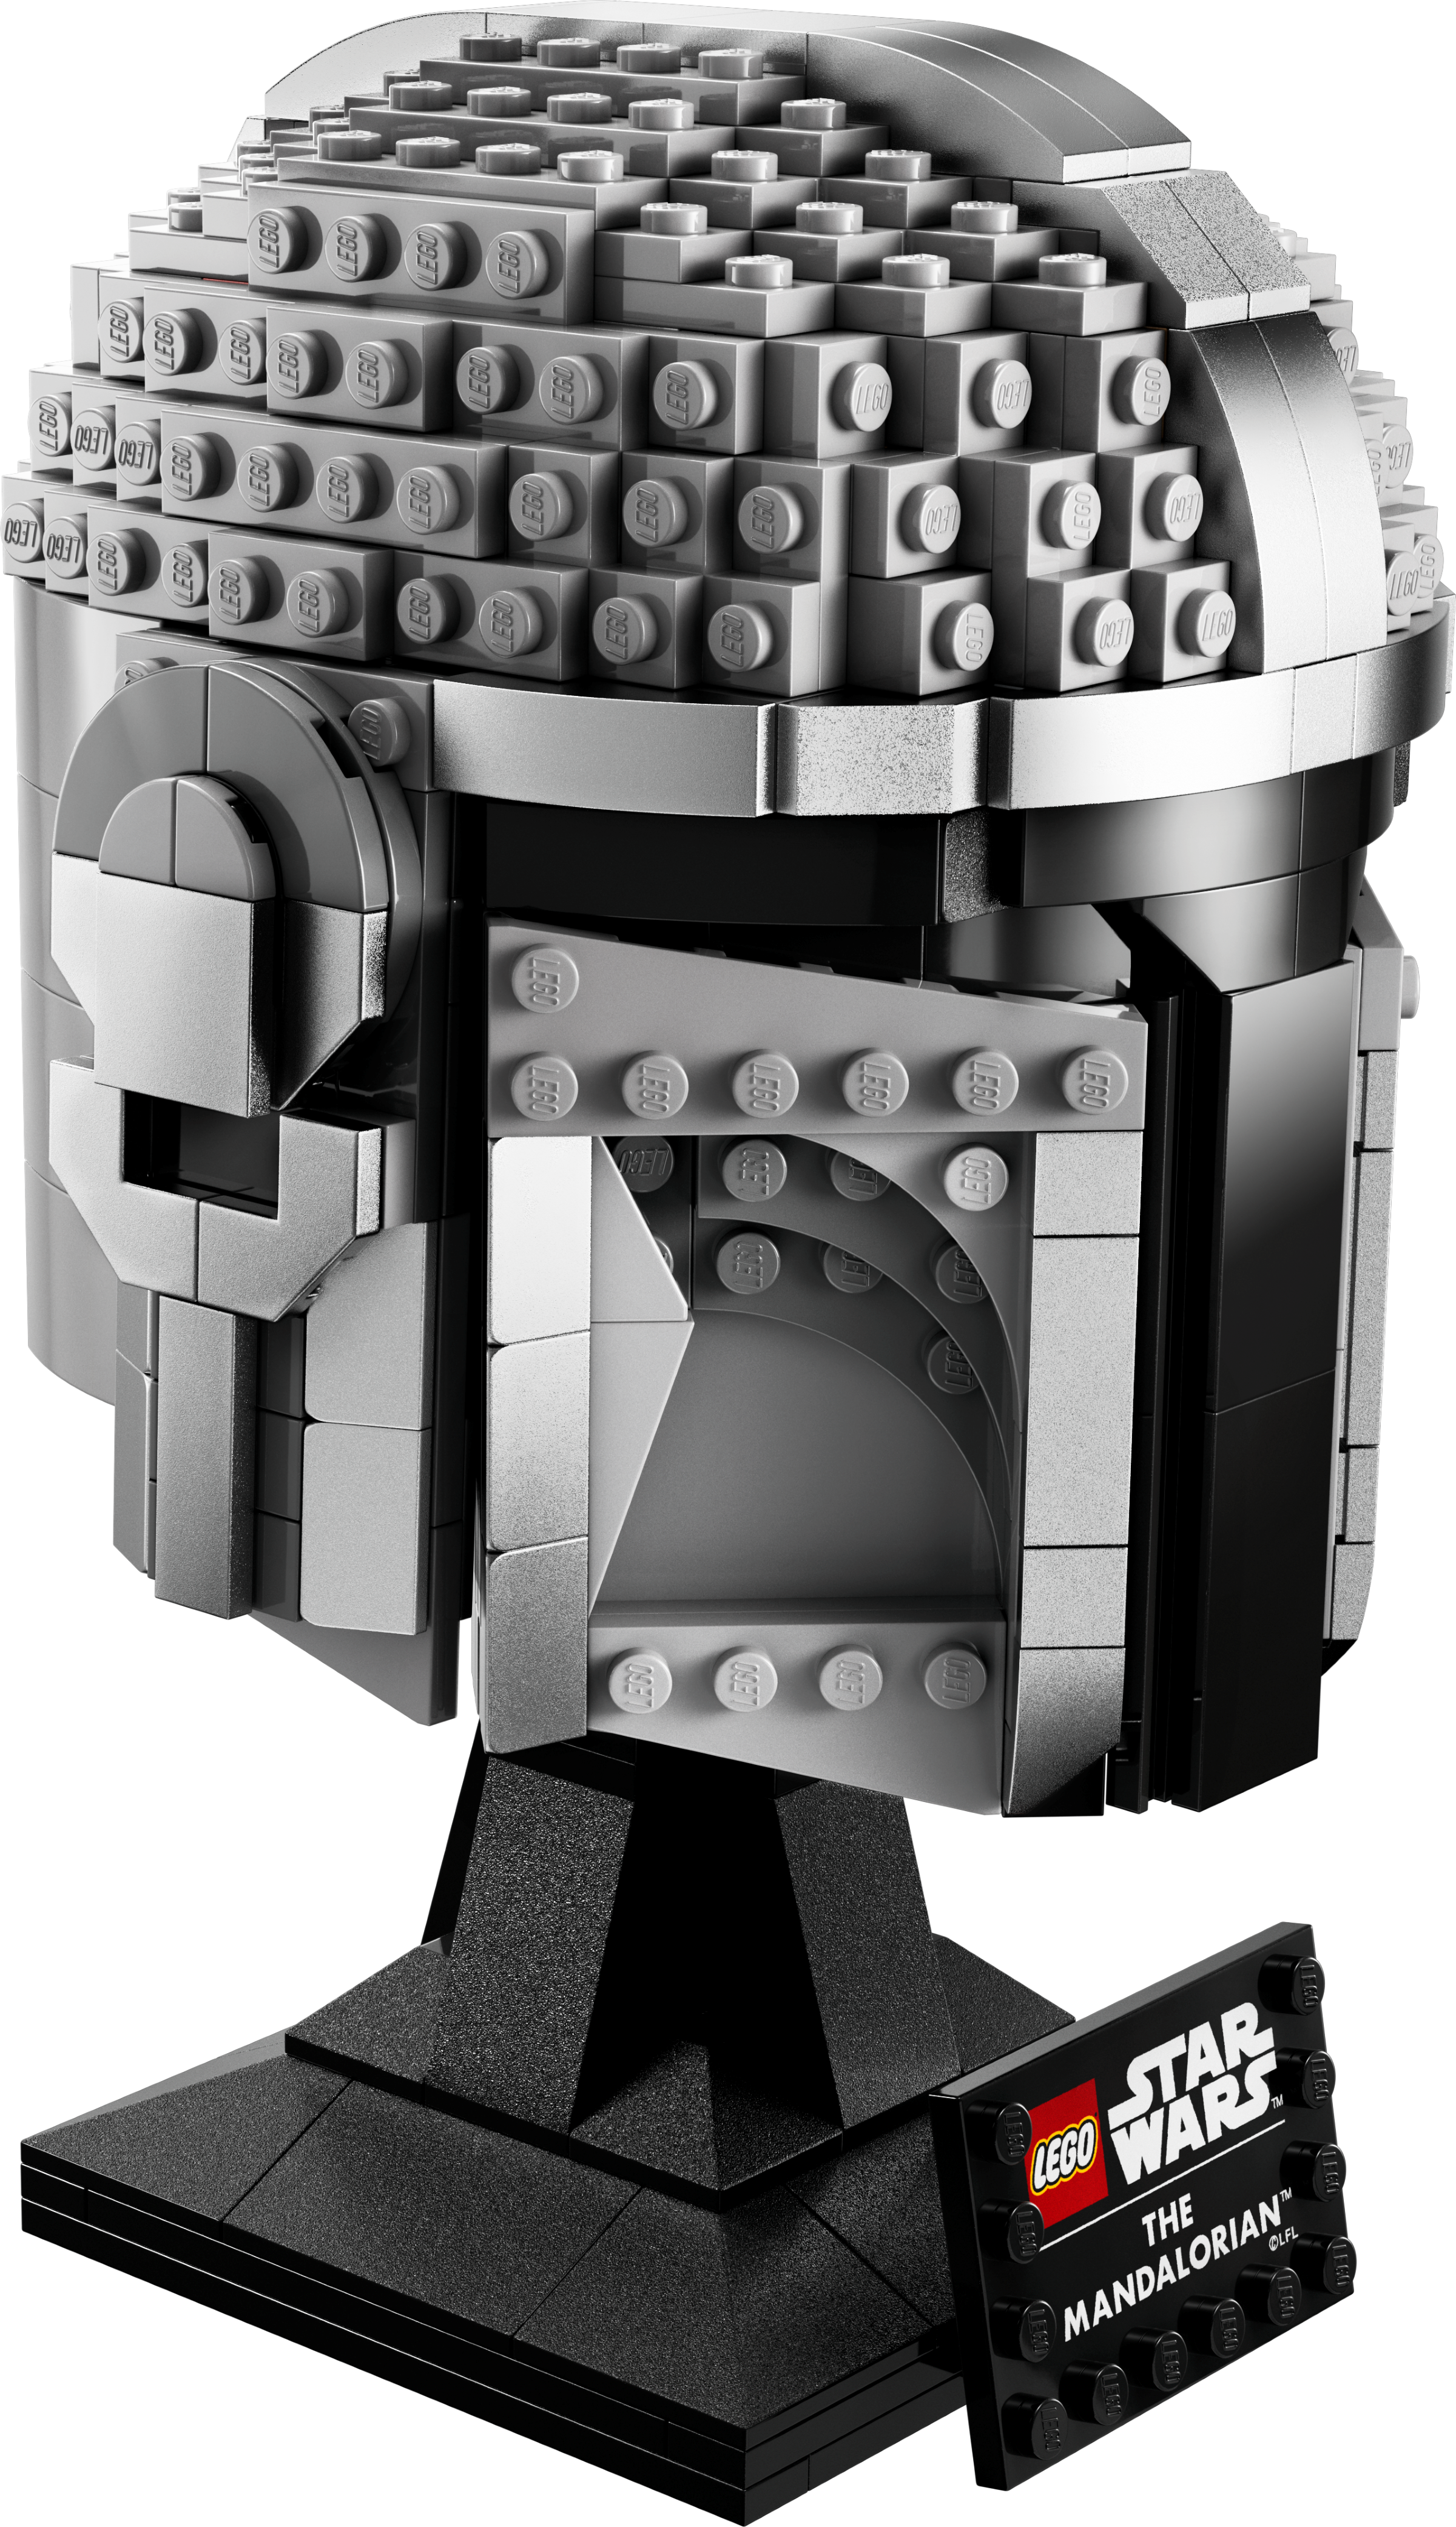 LEGO Star Wars 75328 The Mandalorian Helmet full review